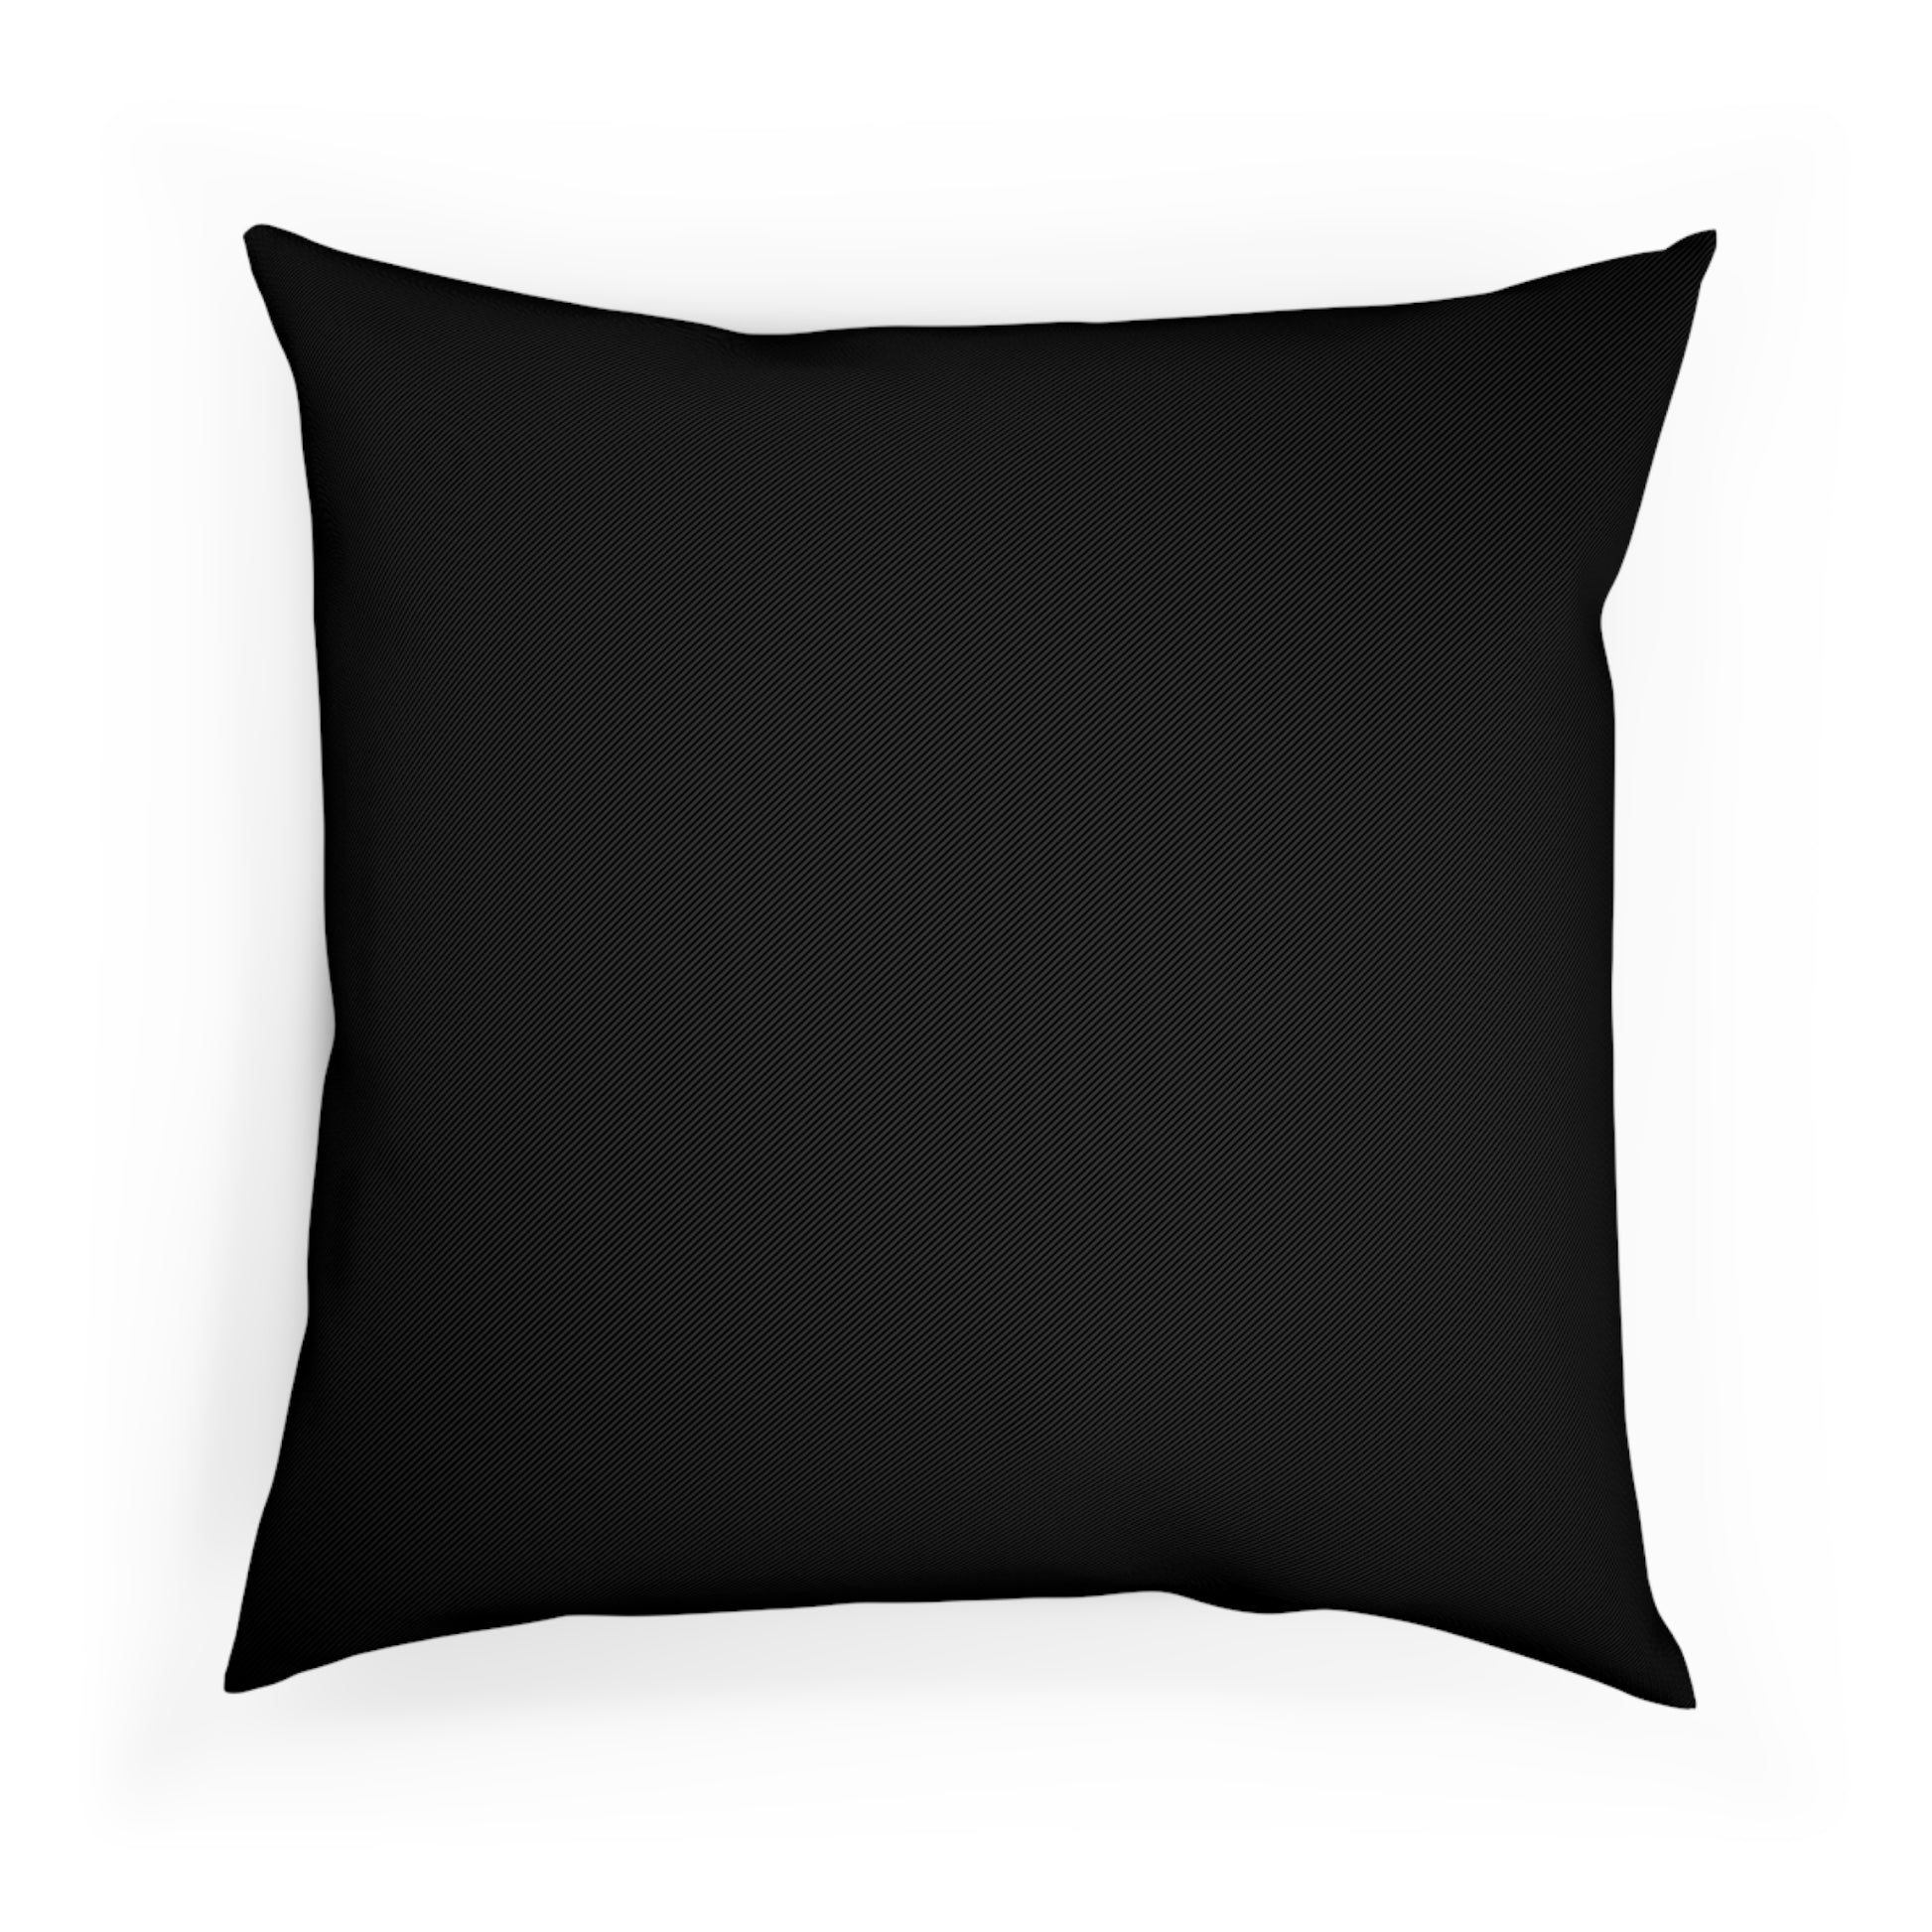 Cushions Follow Your Dreams - Frogos Design